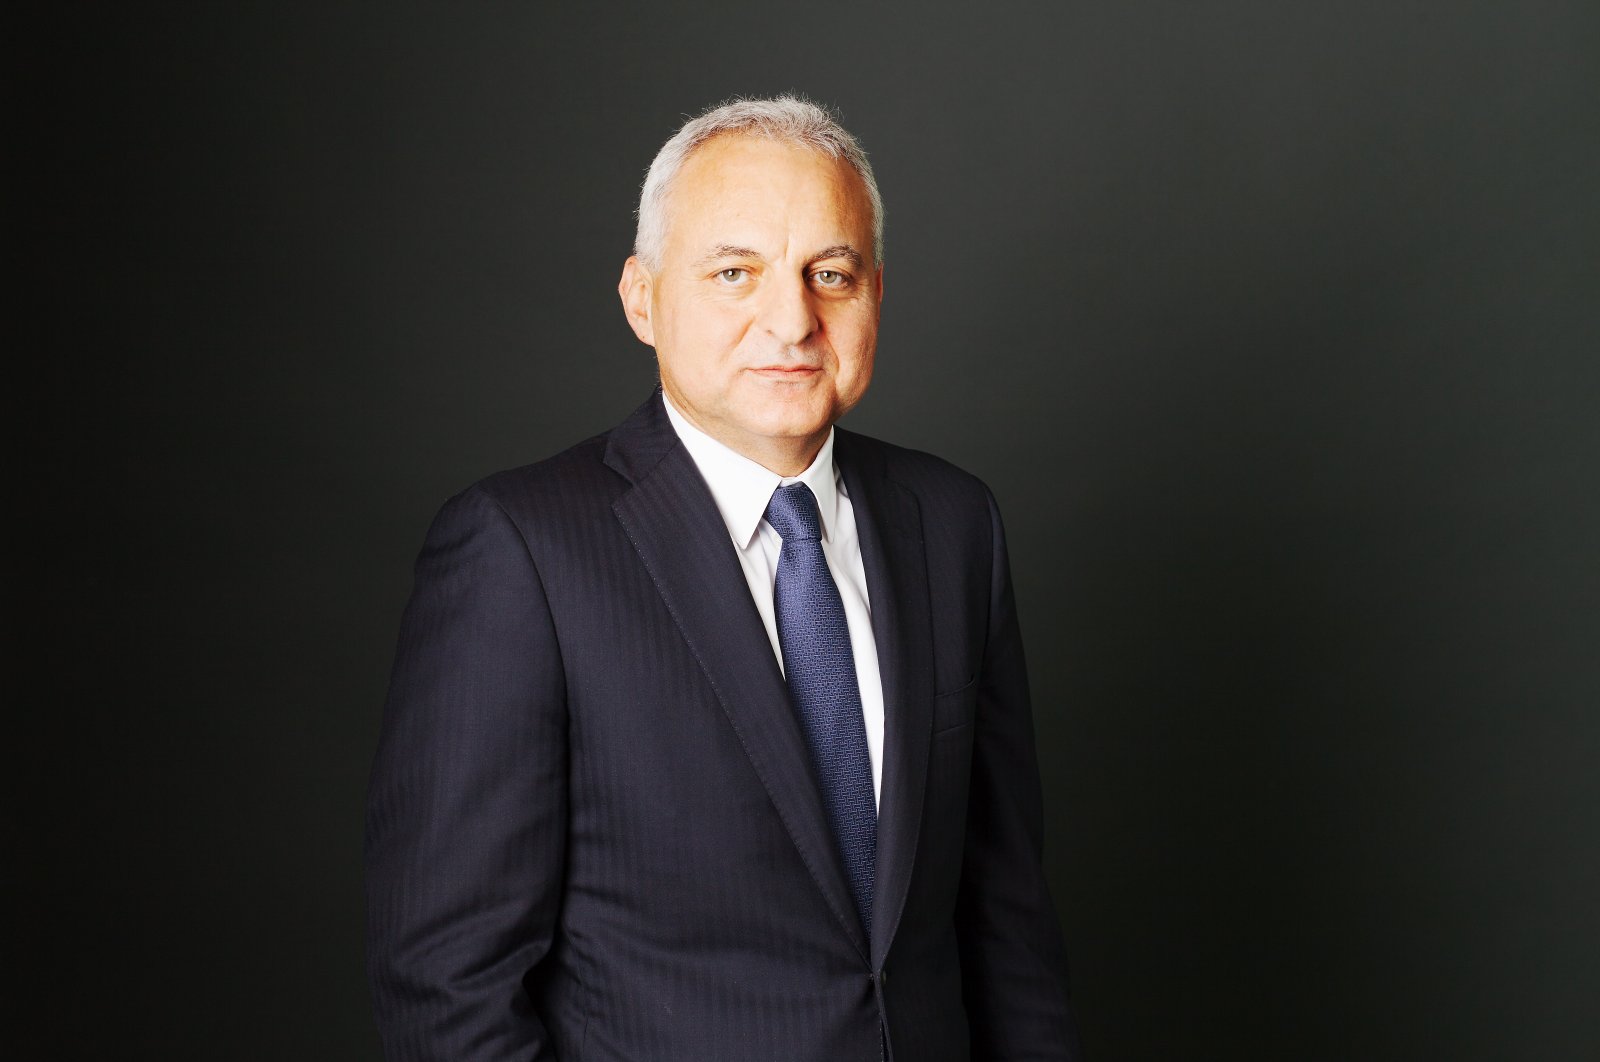 Rolls-Royce&#039;s new CEO Tufan Erginbilgiç. (Courtesy of Rolls-Royce)